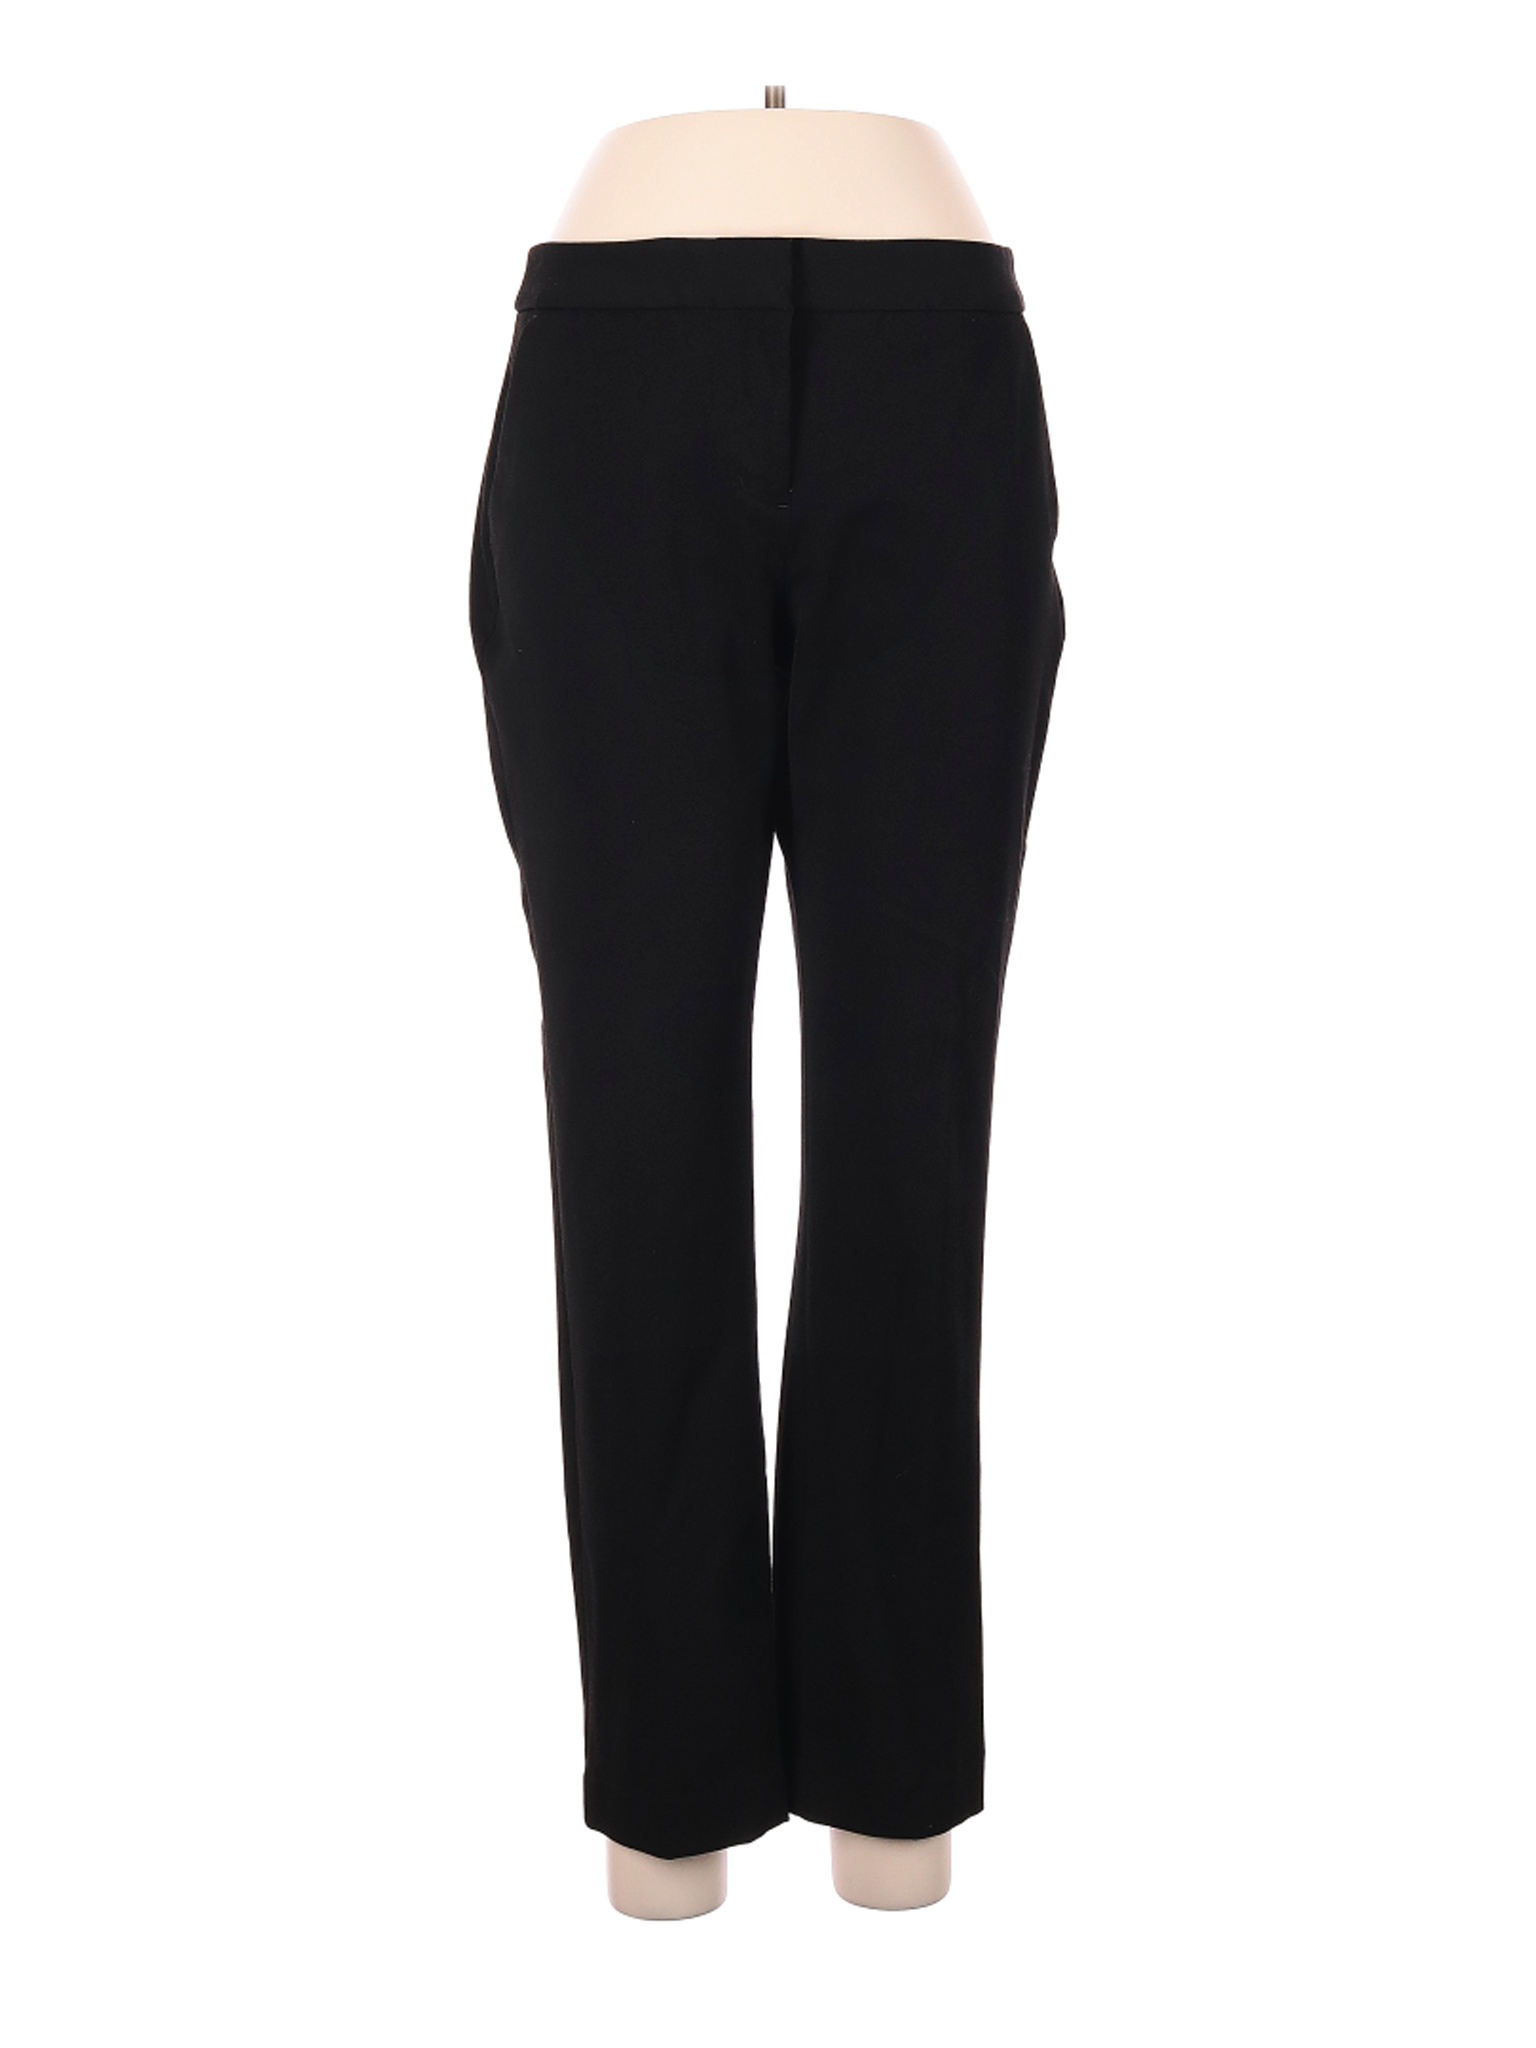 Express Outlet Women Black Dress Pants 8 | eBay